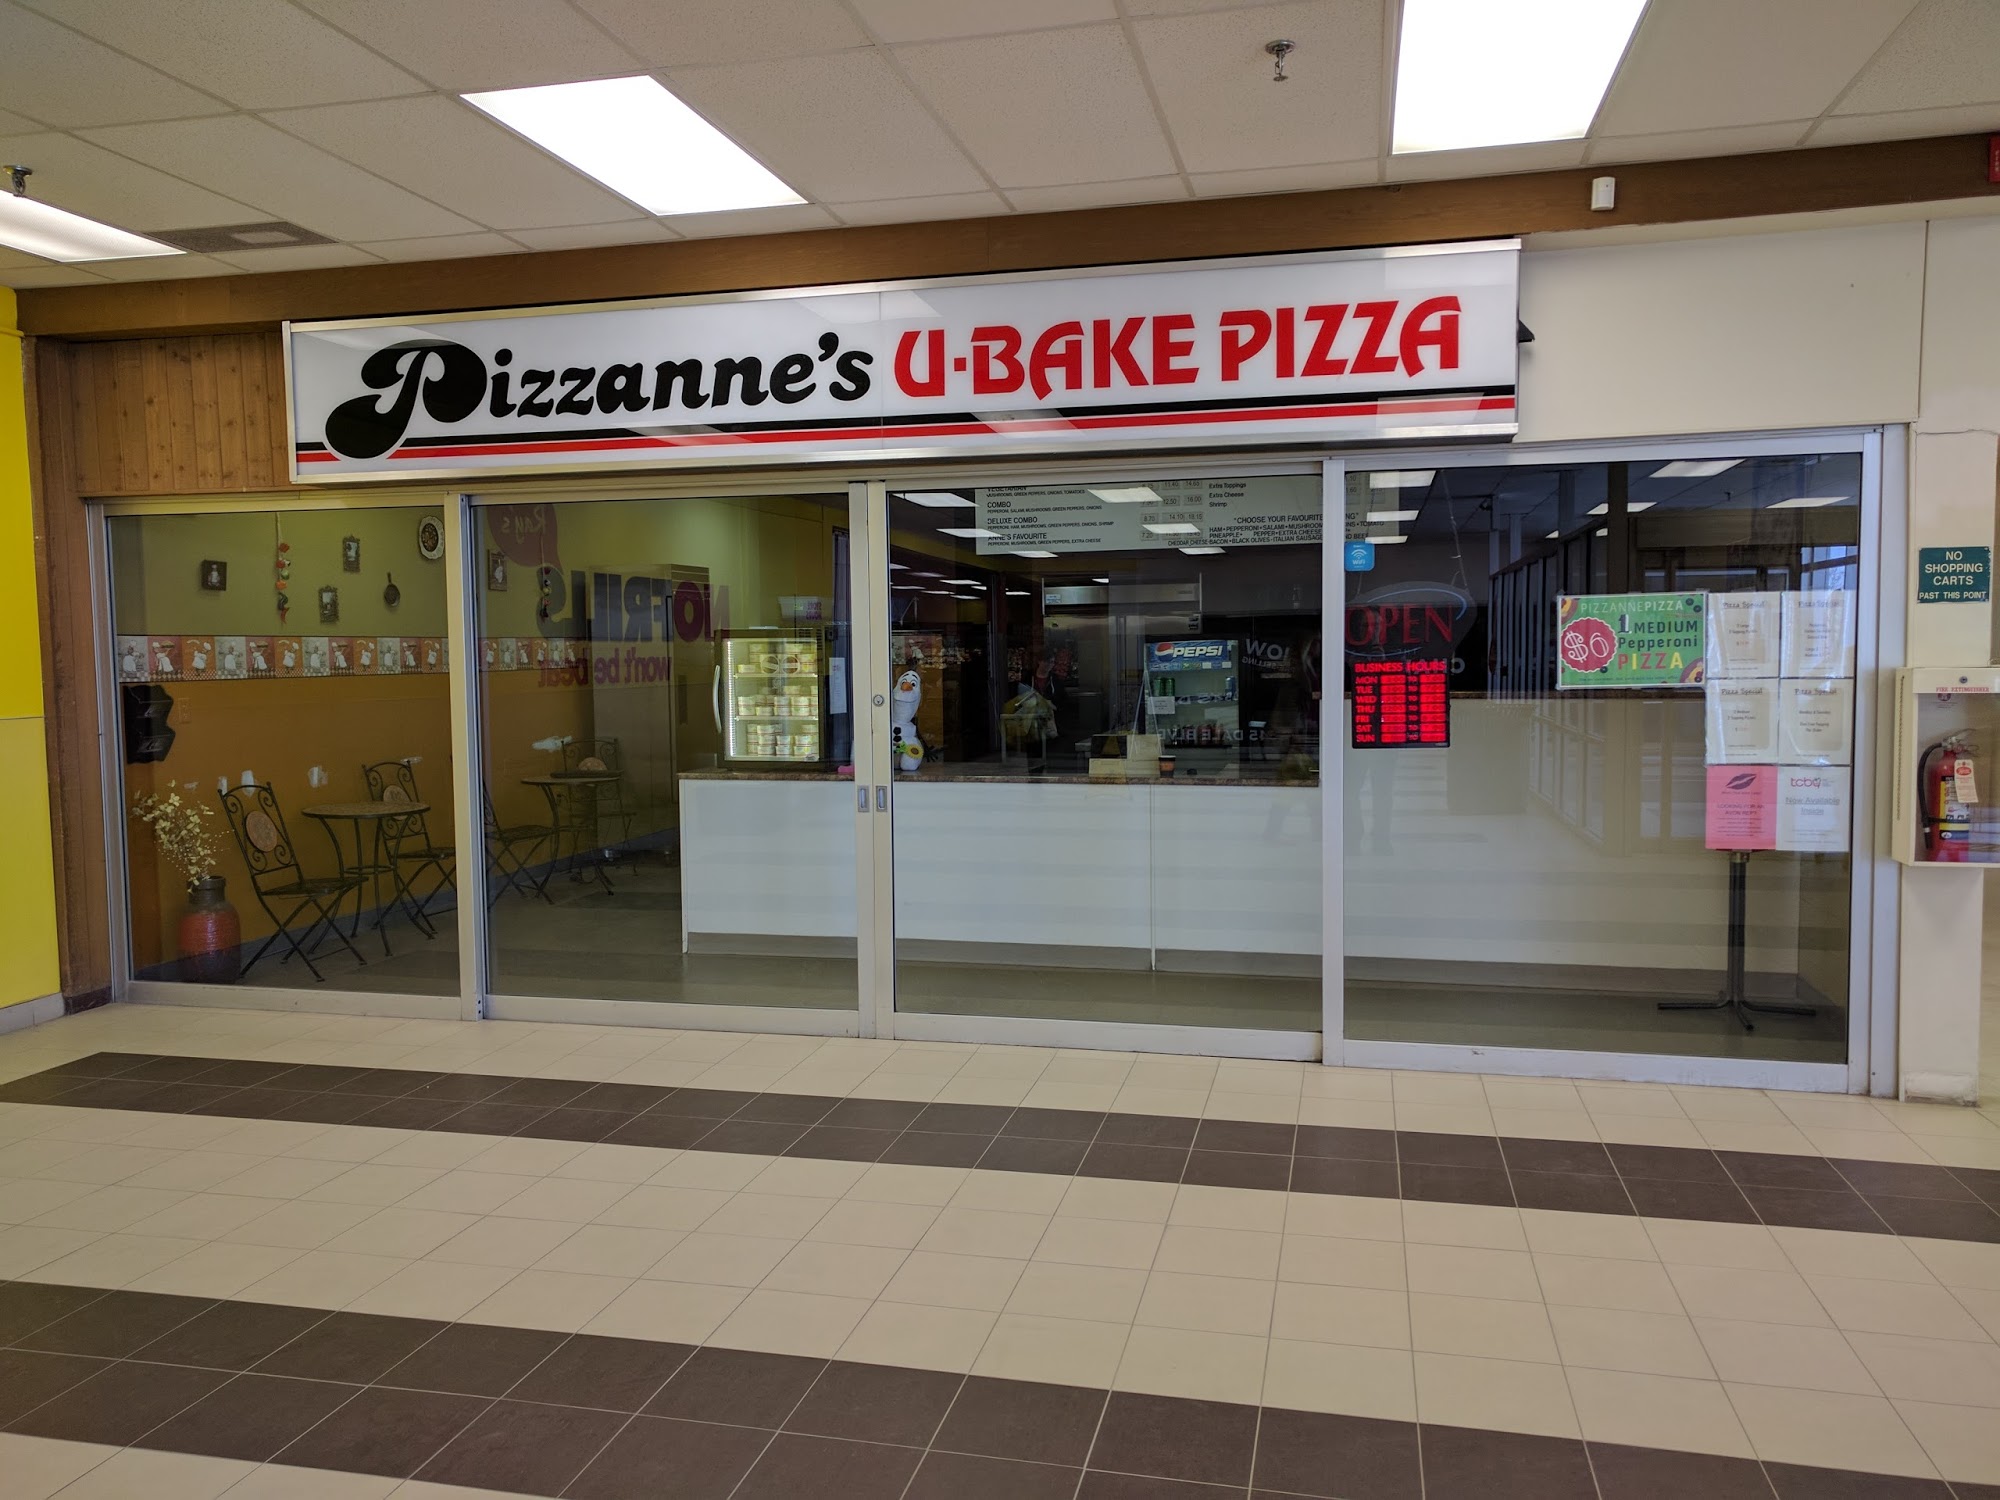 Pizzanne's U-Bake Pizza